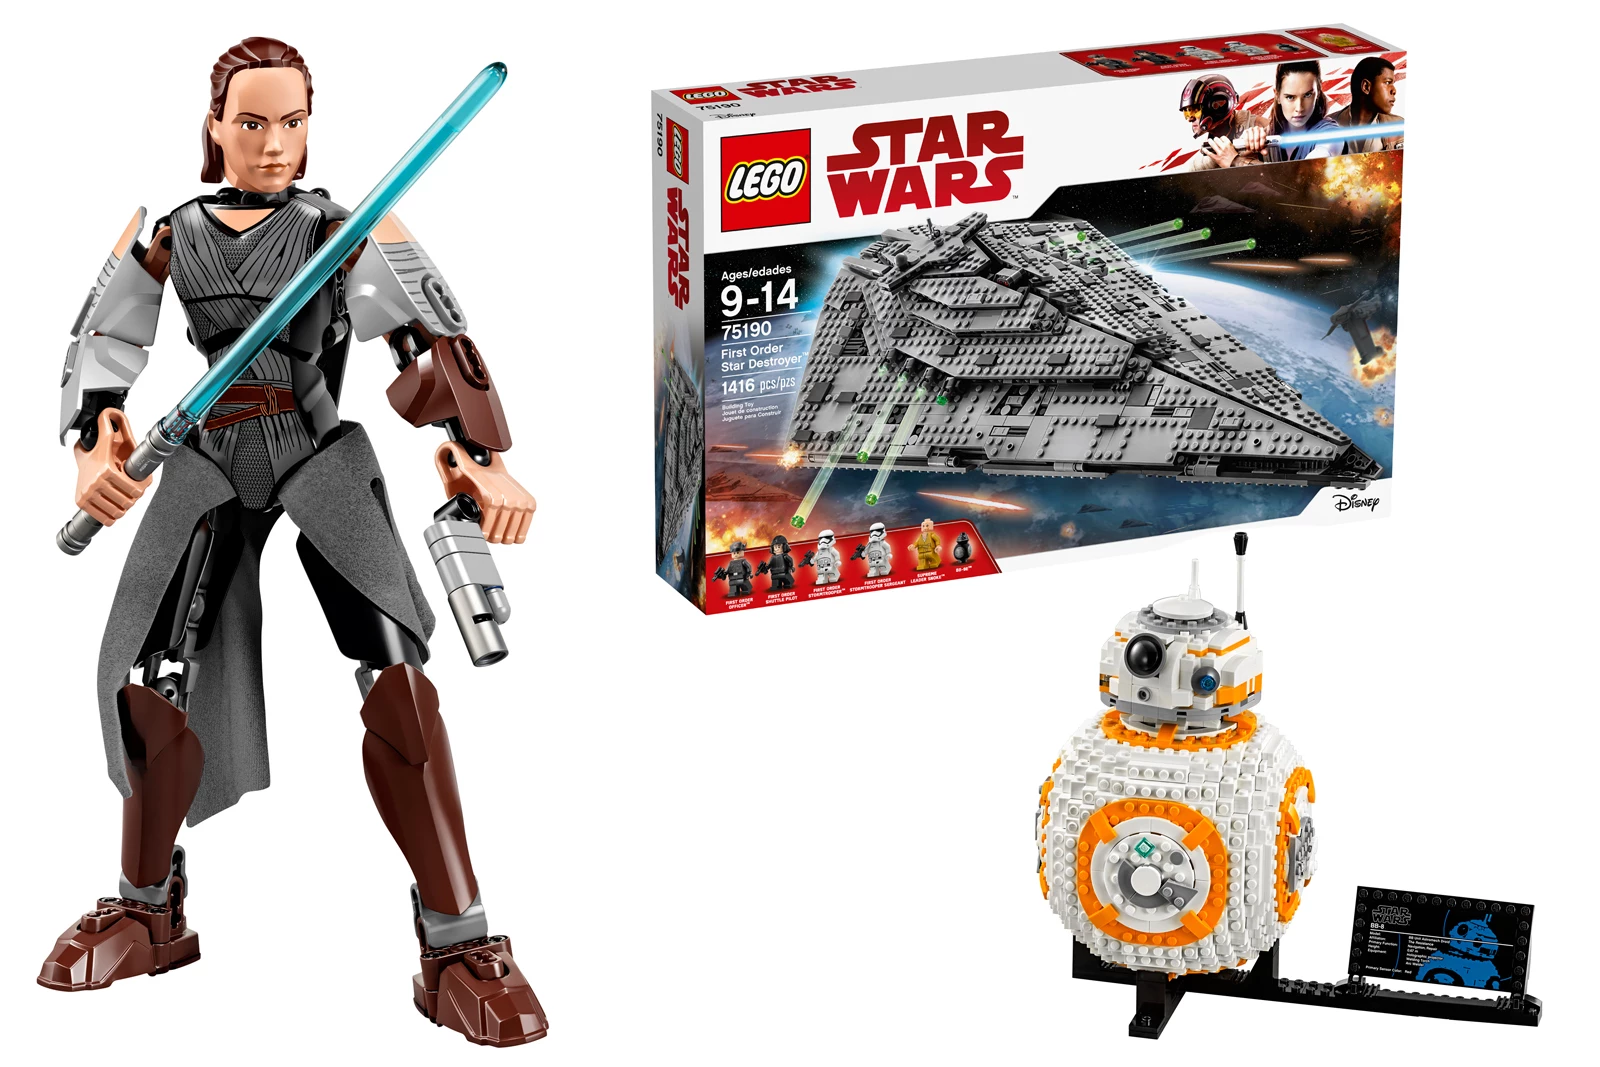 Every New Lego Star Wars: The Last Jedi Set - New Vehicles